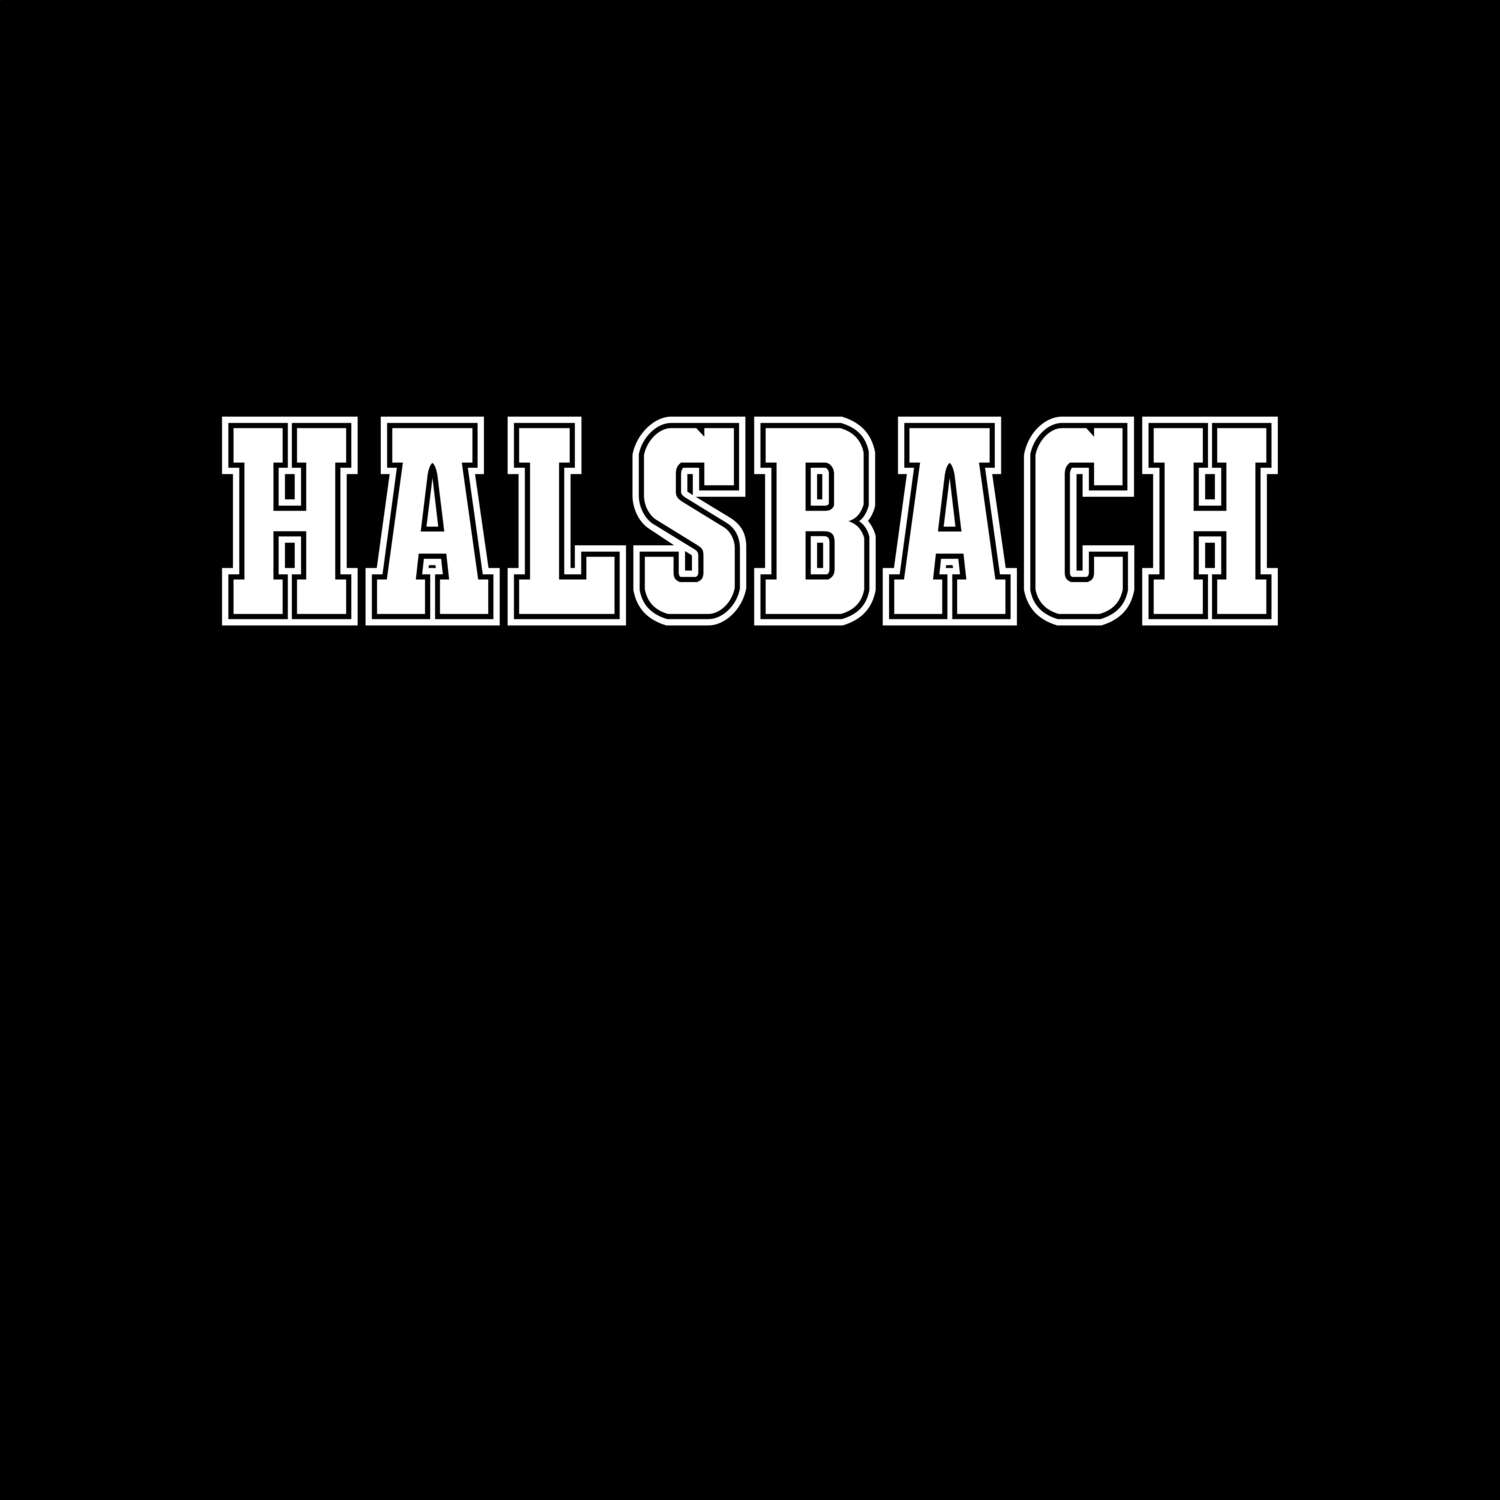 Halsbach T-Shirt »Classic«